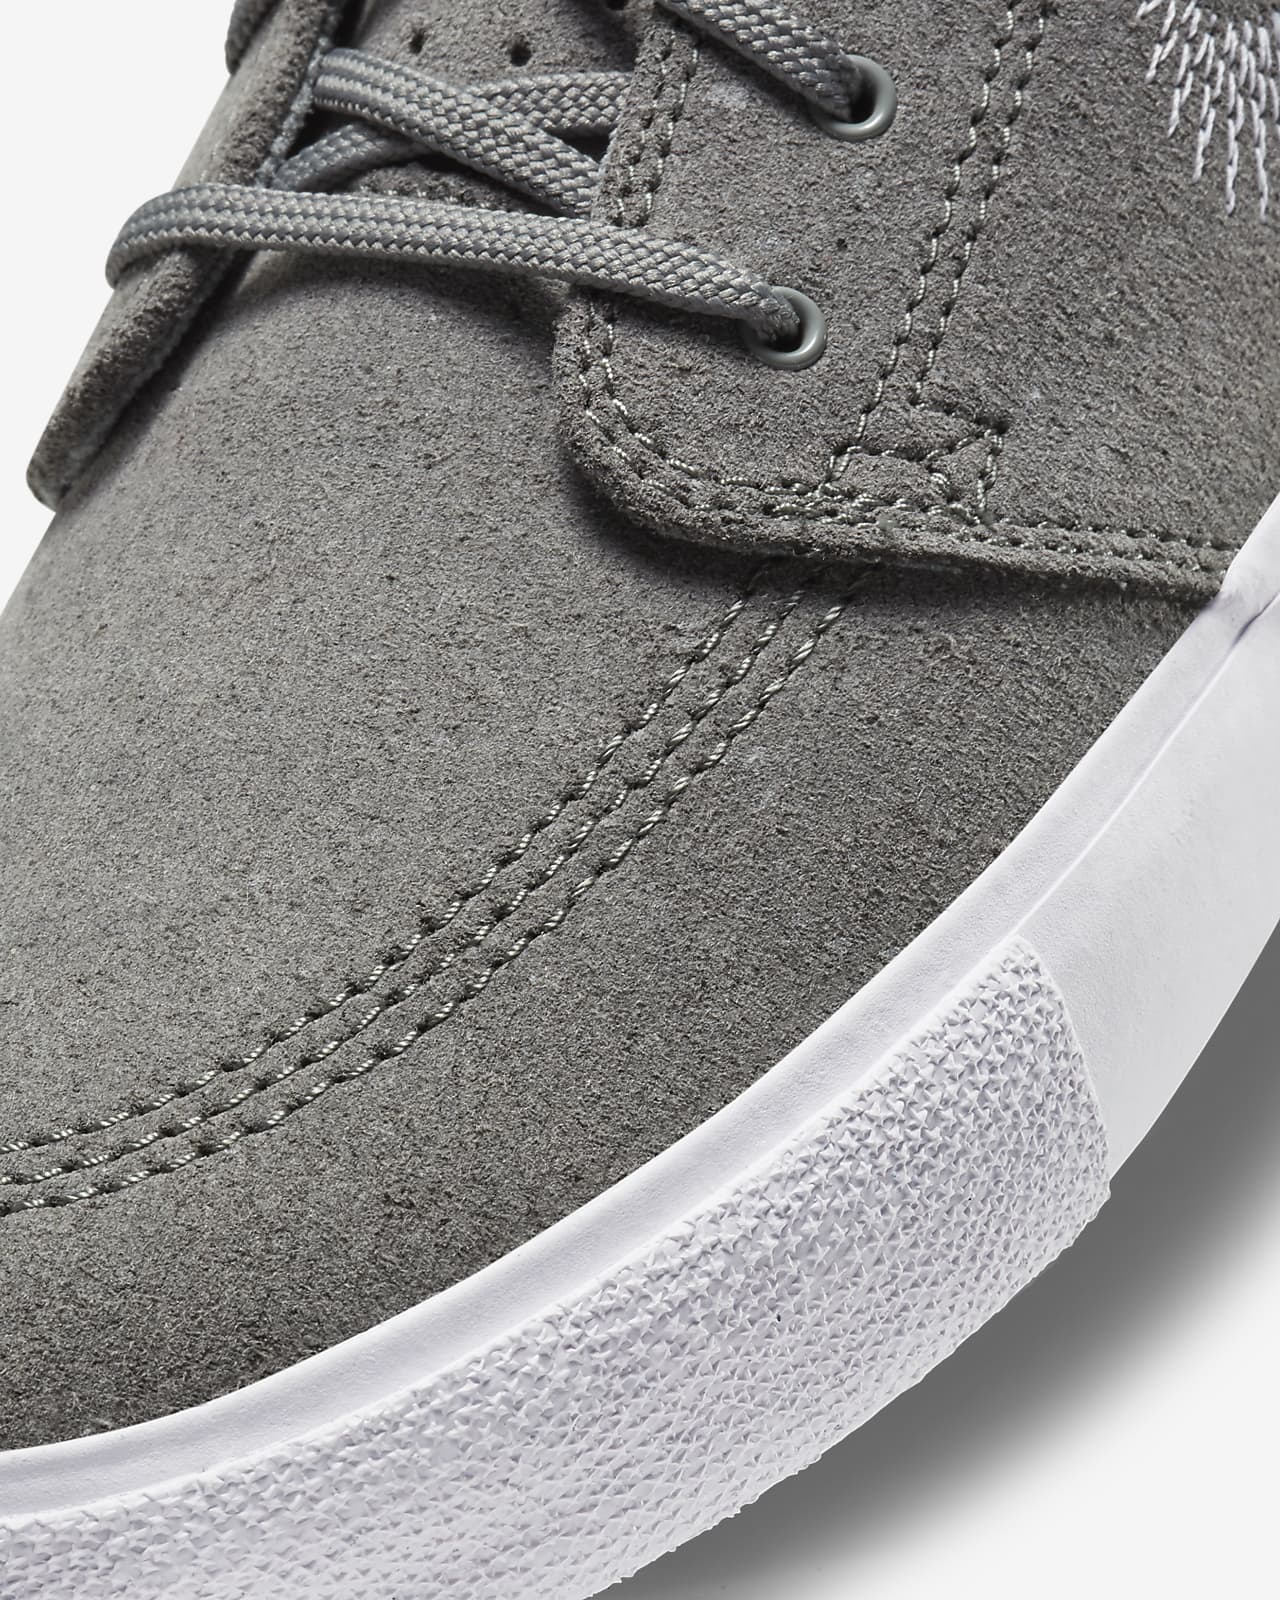 nike sb janoski canvas grey & white skate shoes